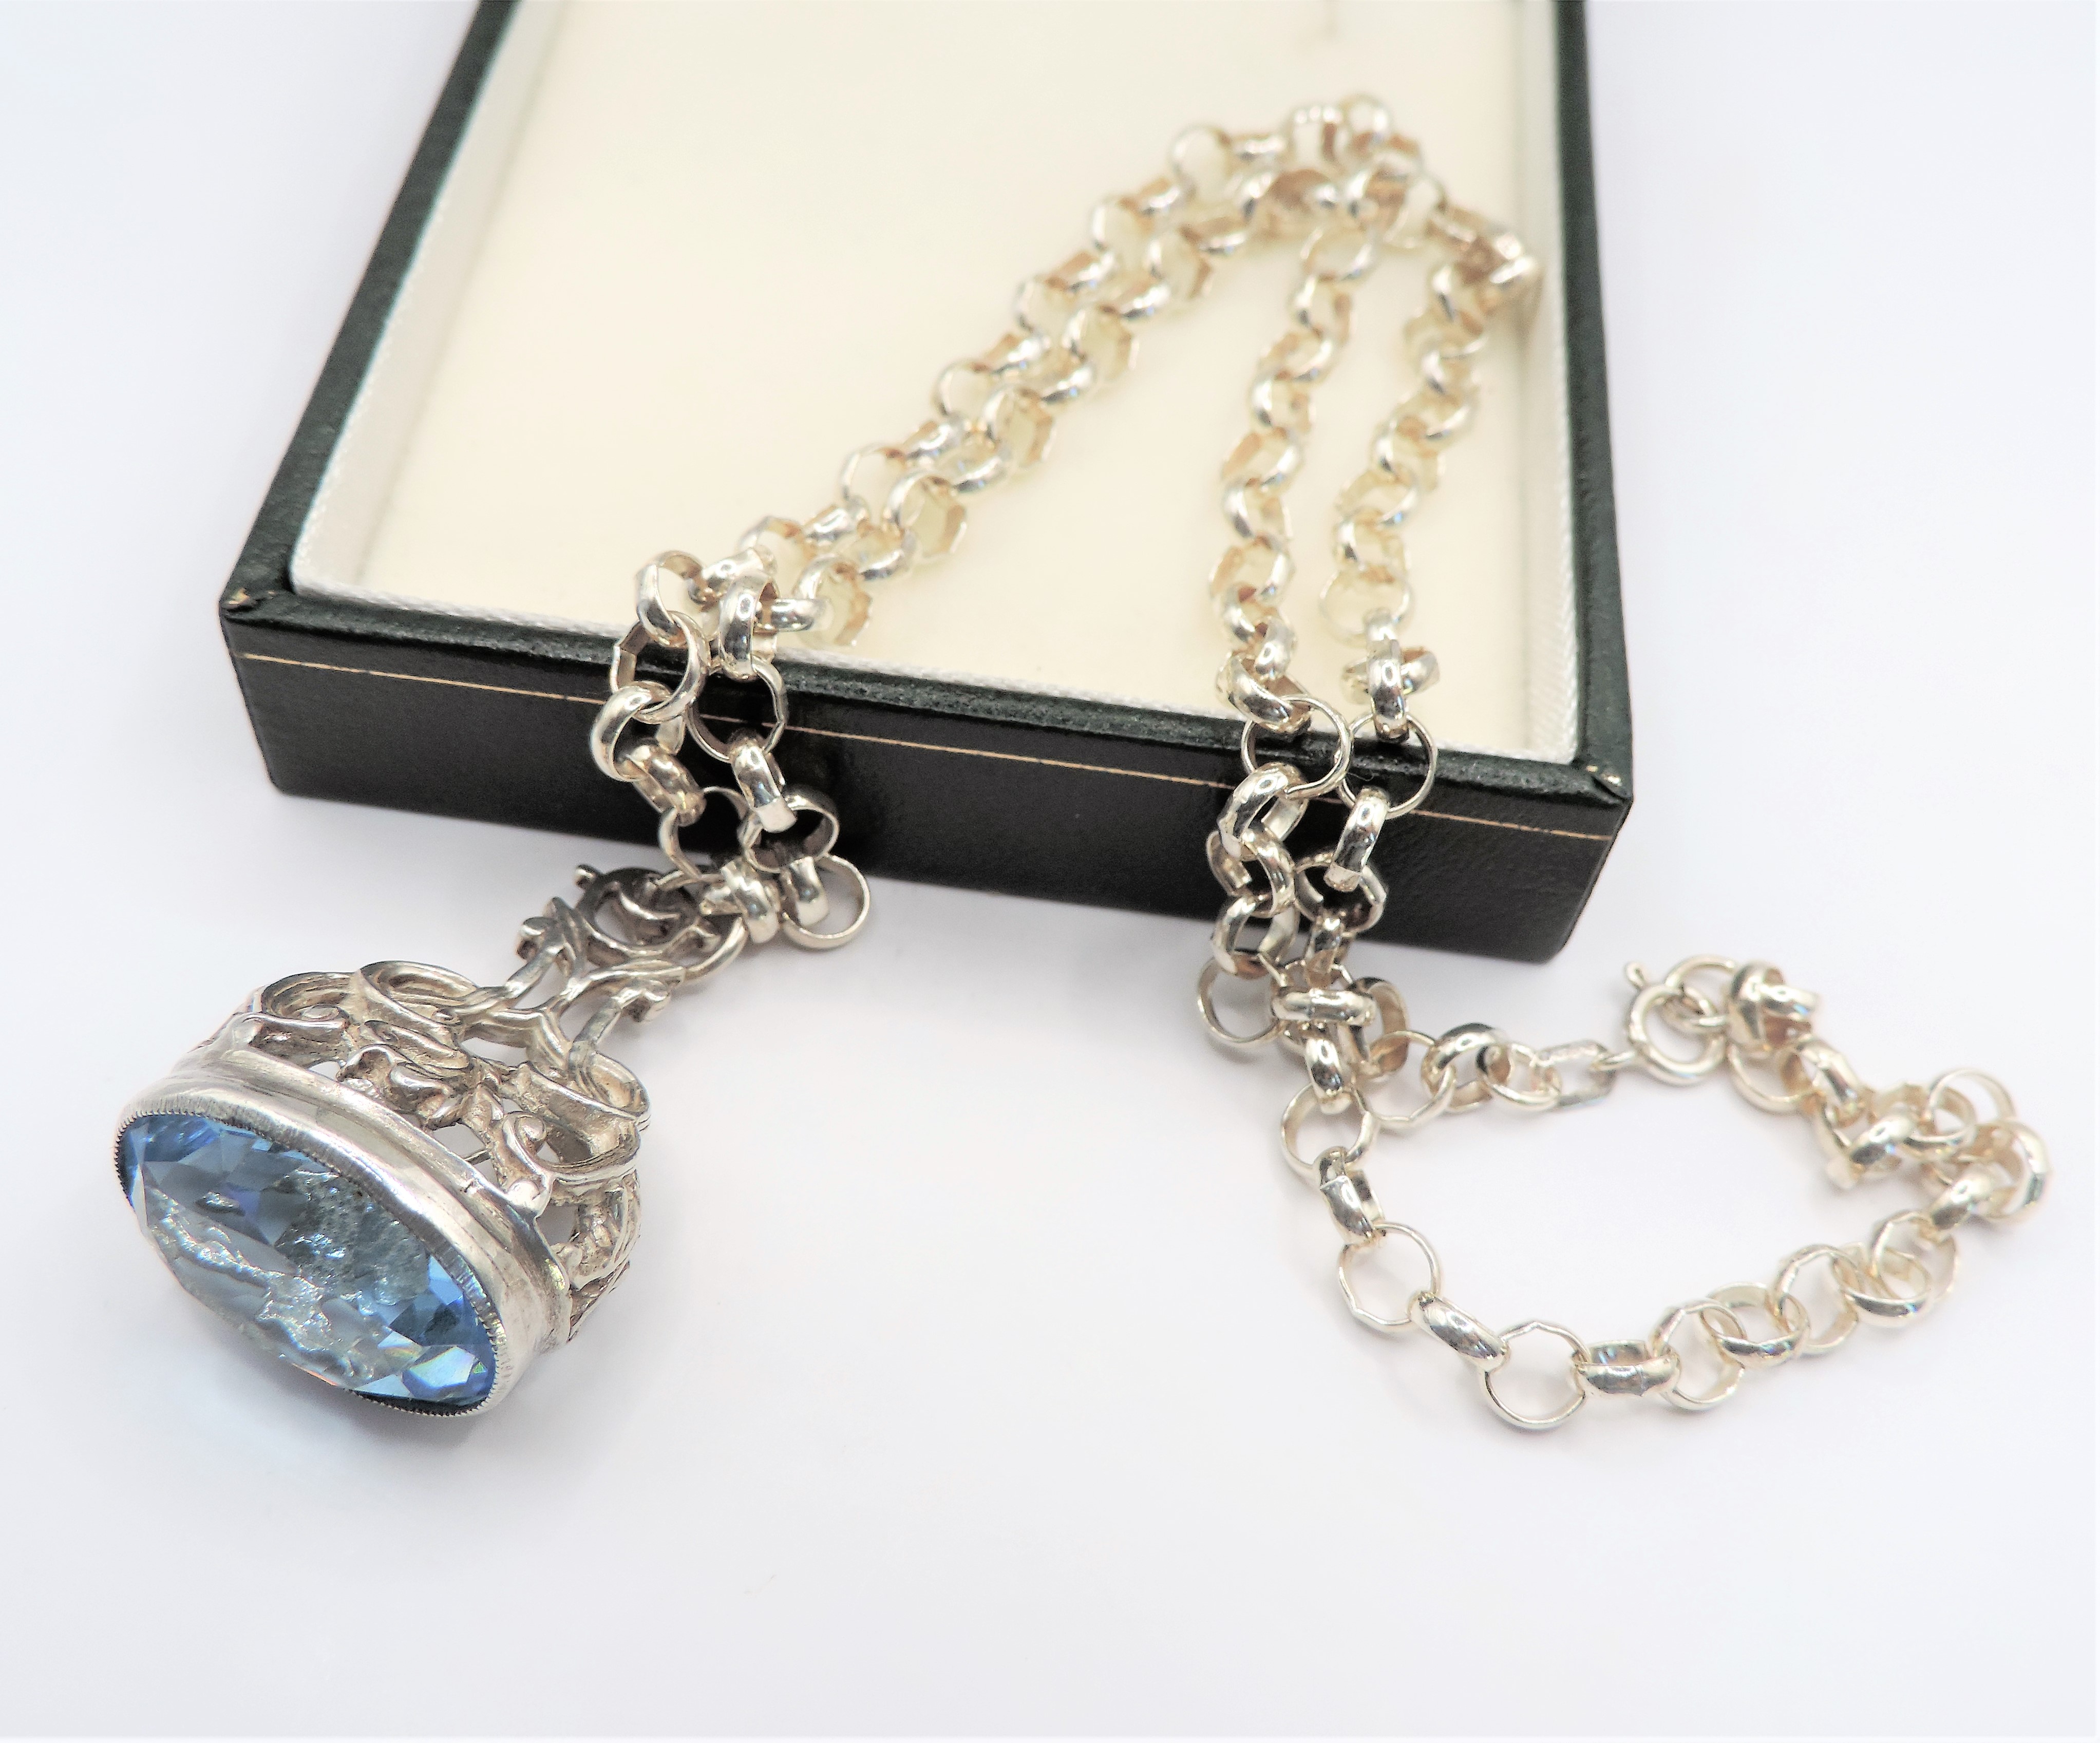 Vintage Sterling Silver Blue Topaz Fob Pendant on Belcher Chain